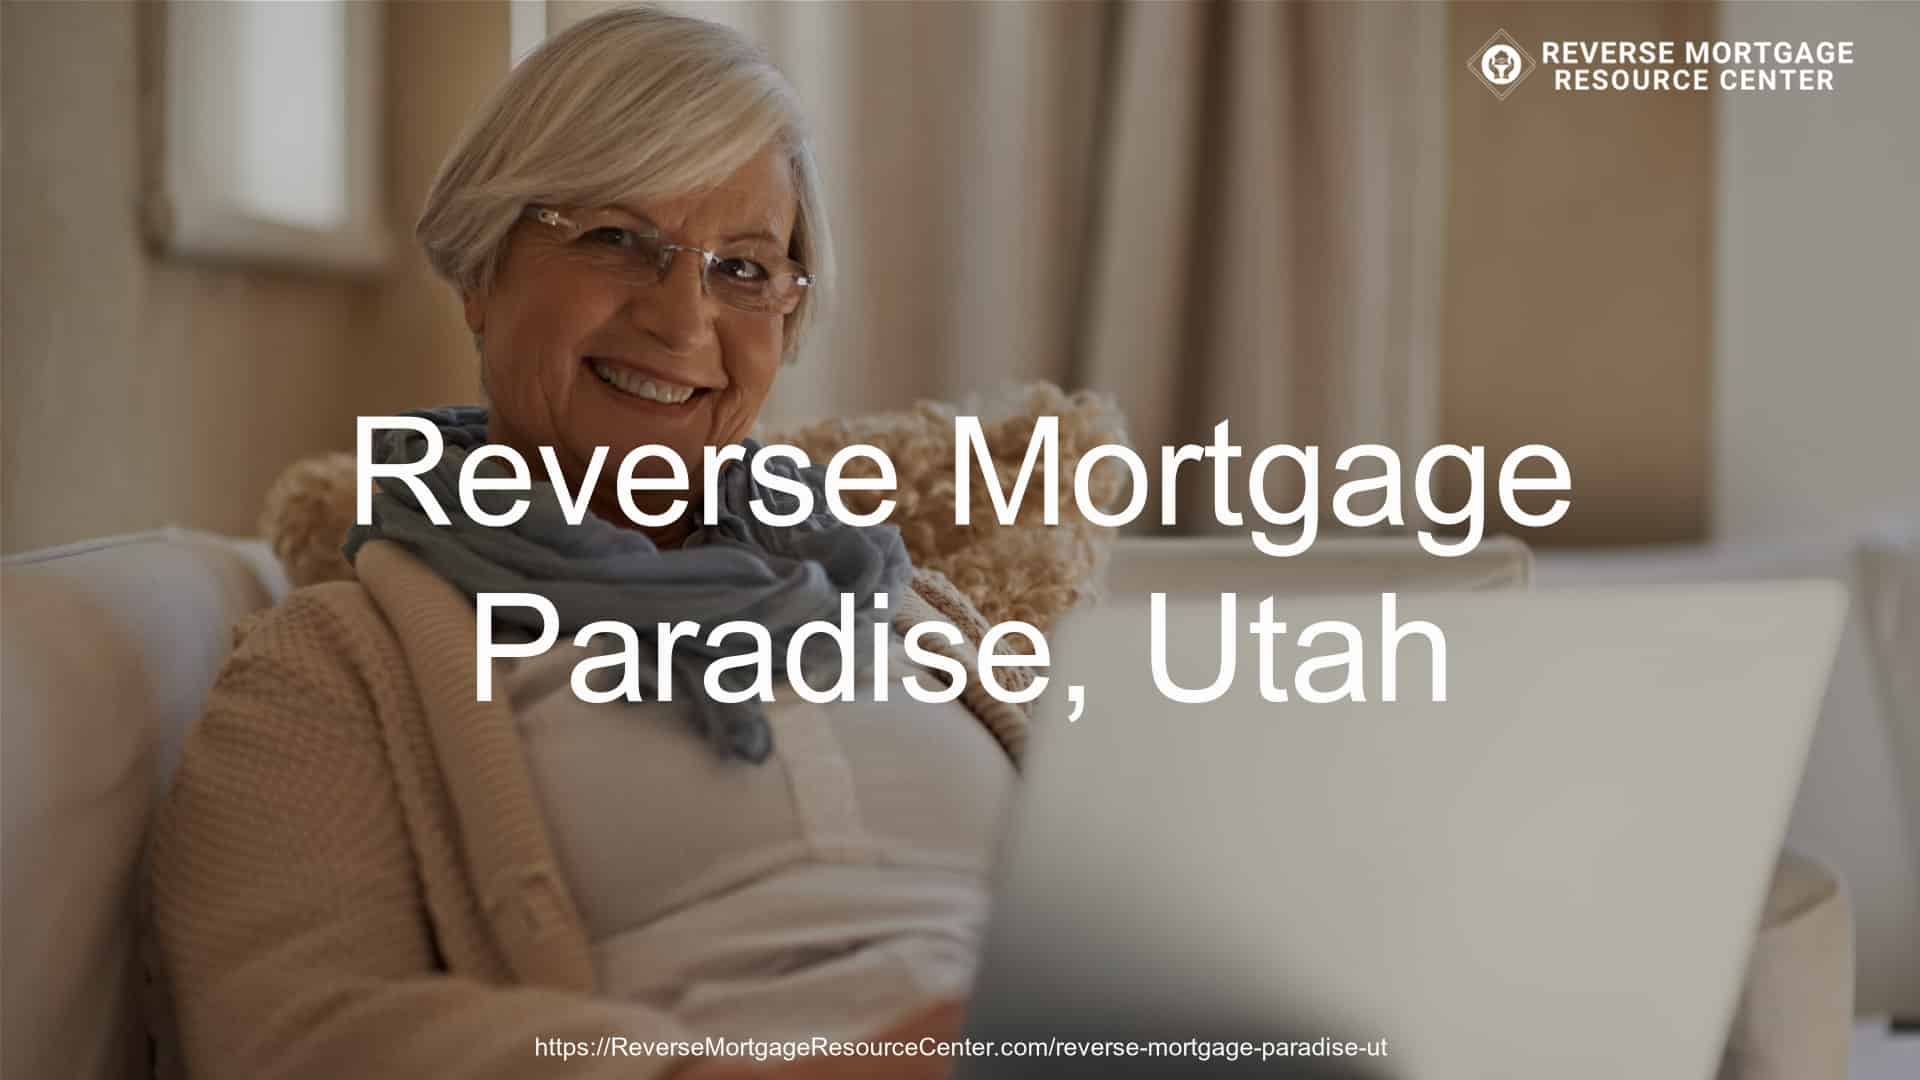 Reverse Mortgage Loans in Paradise Utah